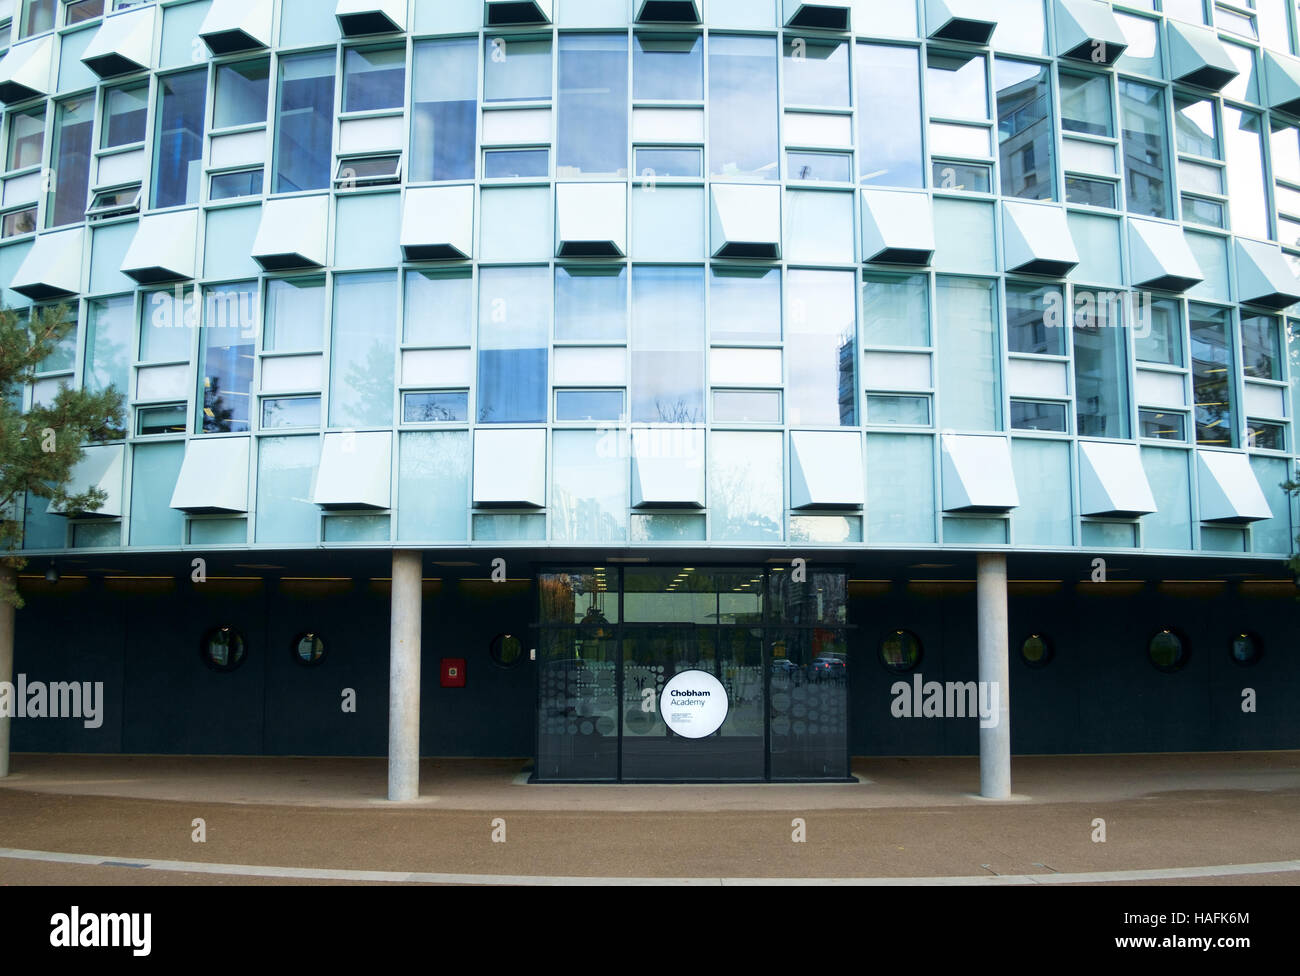 Entrance to Chobham Academy school, East Village E20, London UK Stock Photo